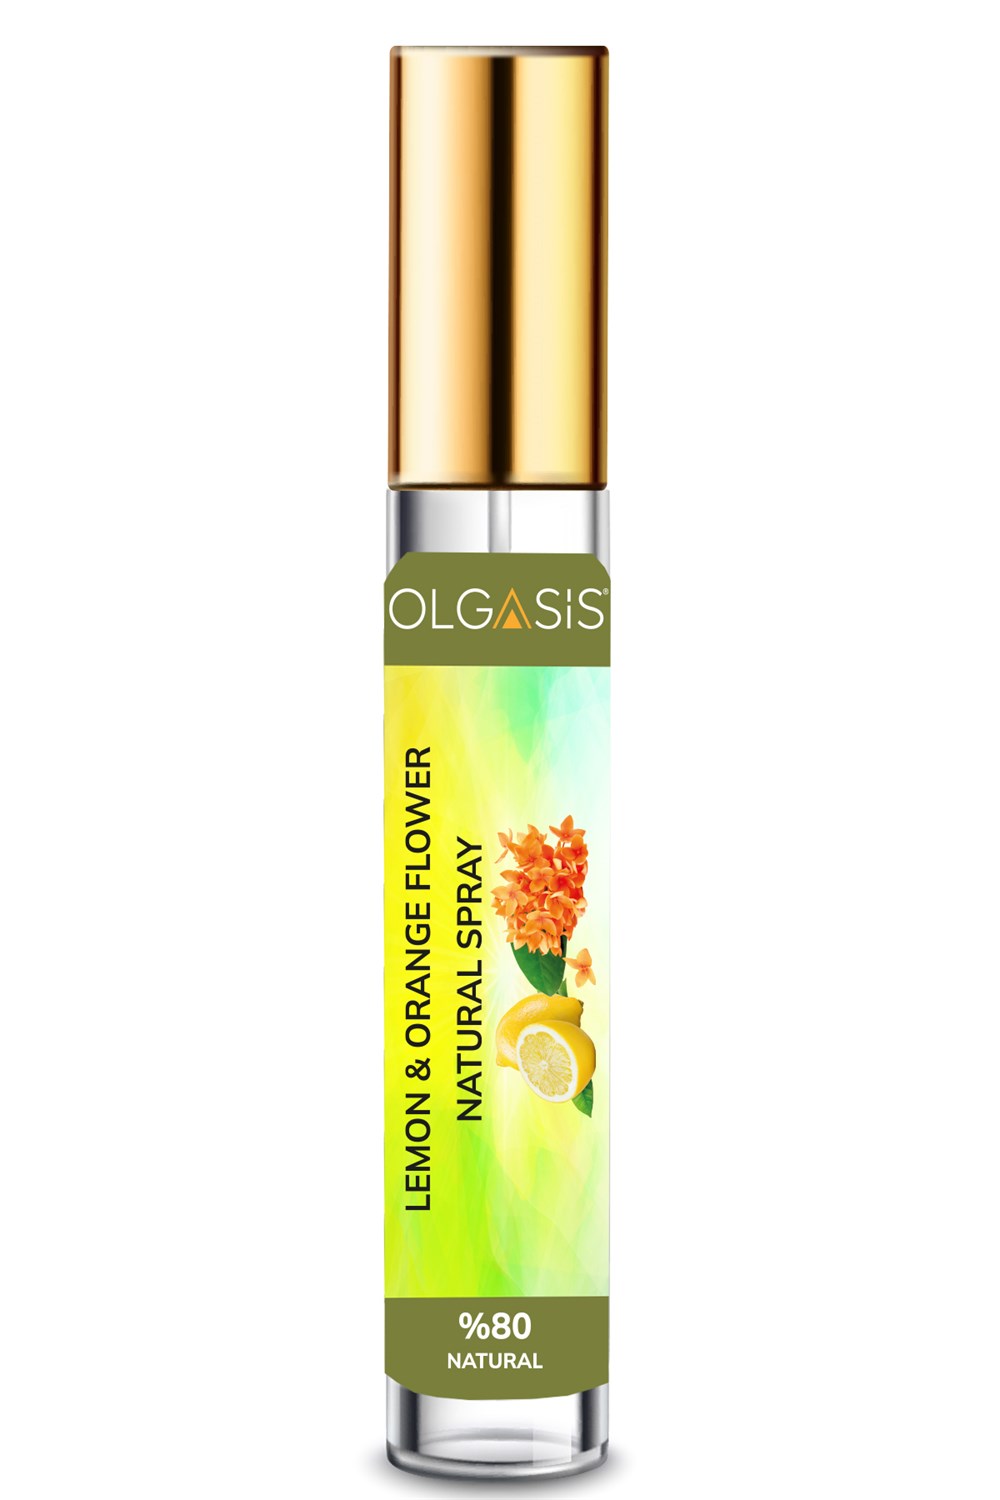 Olgasis Lemon & Orange Flower Natural Spray %80 Natural Limon & Portakal  Çiçeği Parfüm 35